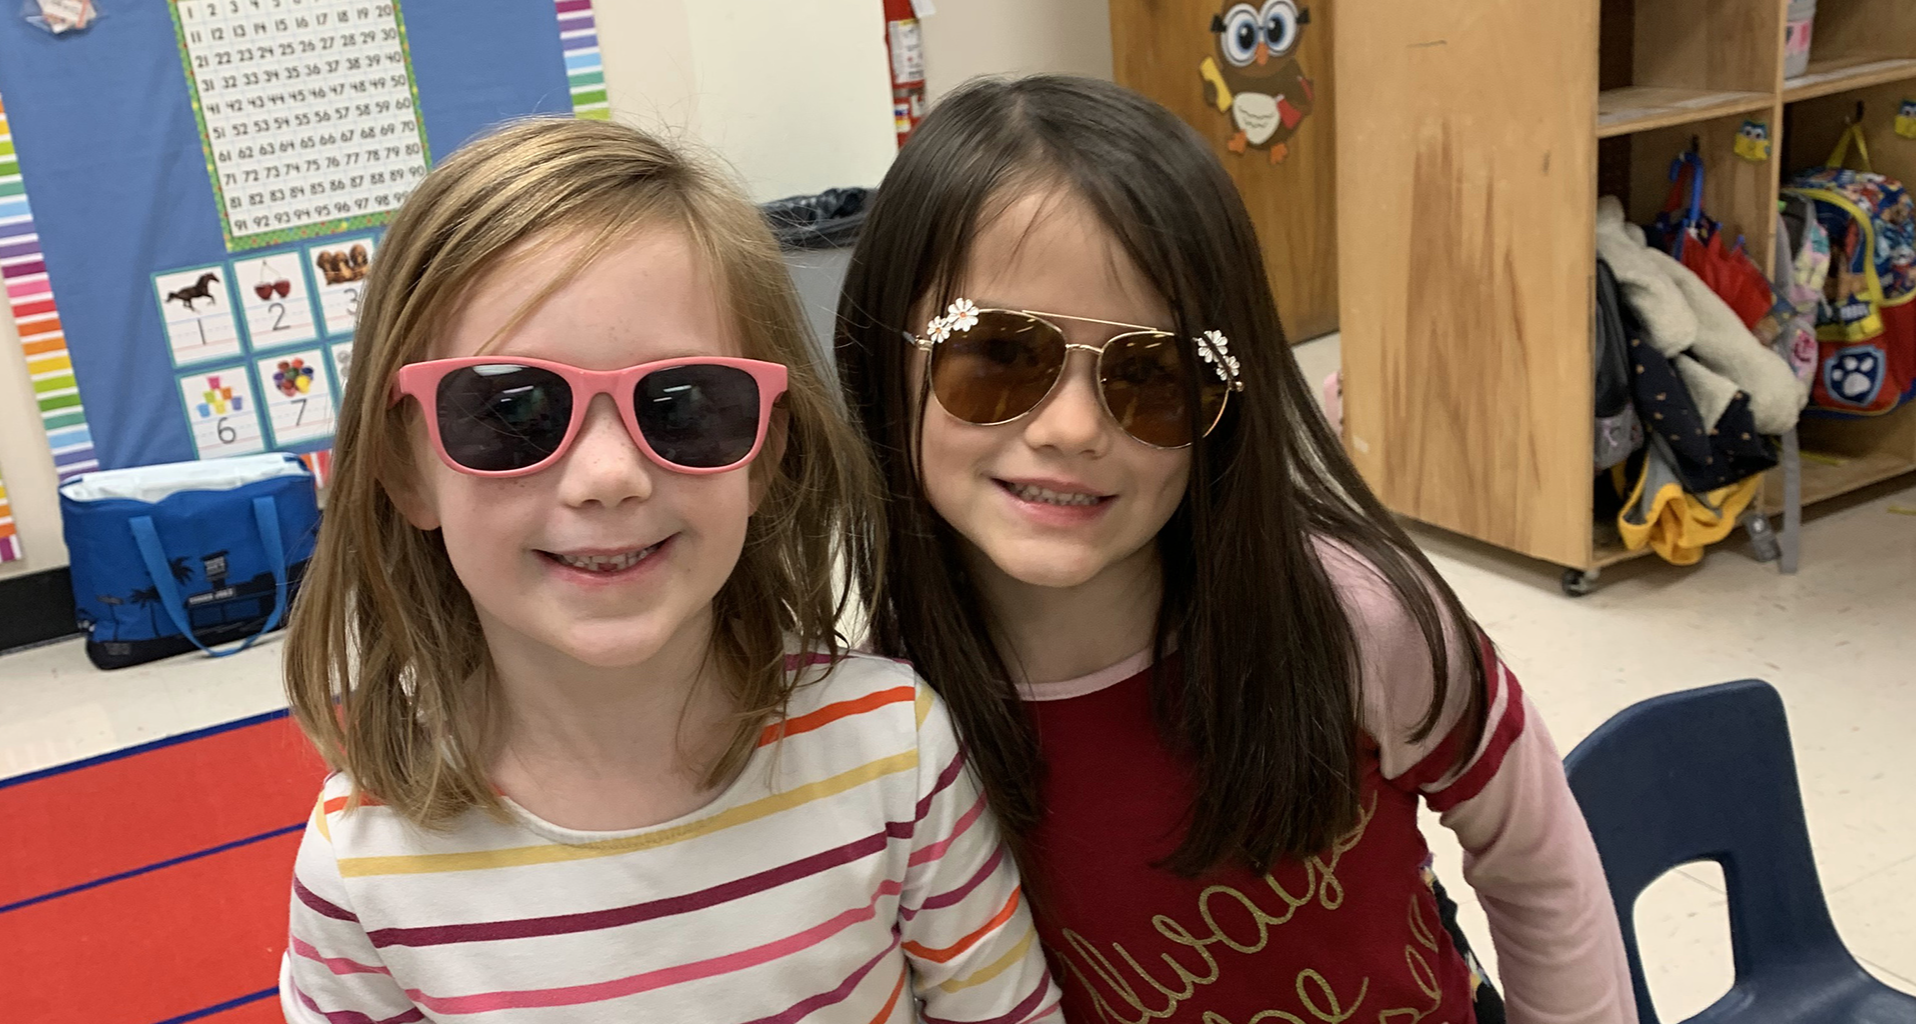 Two girls wearing sunglasses in class